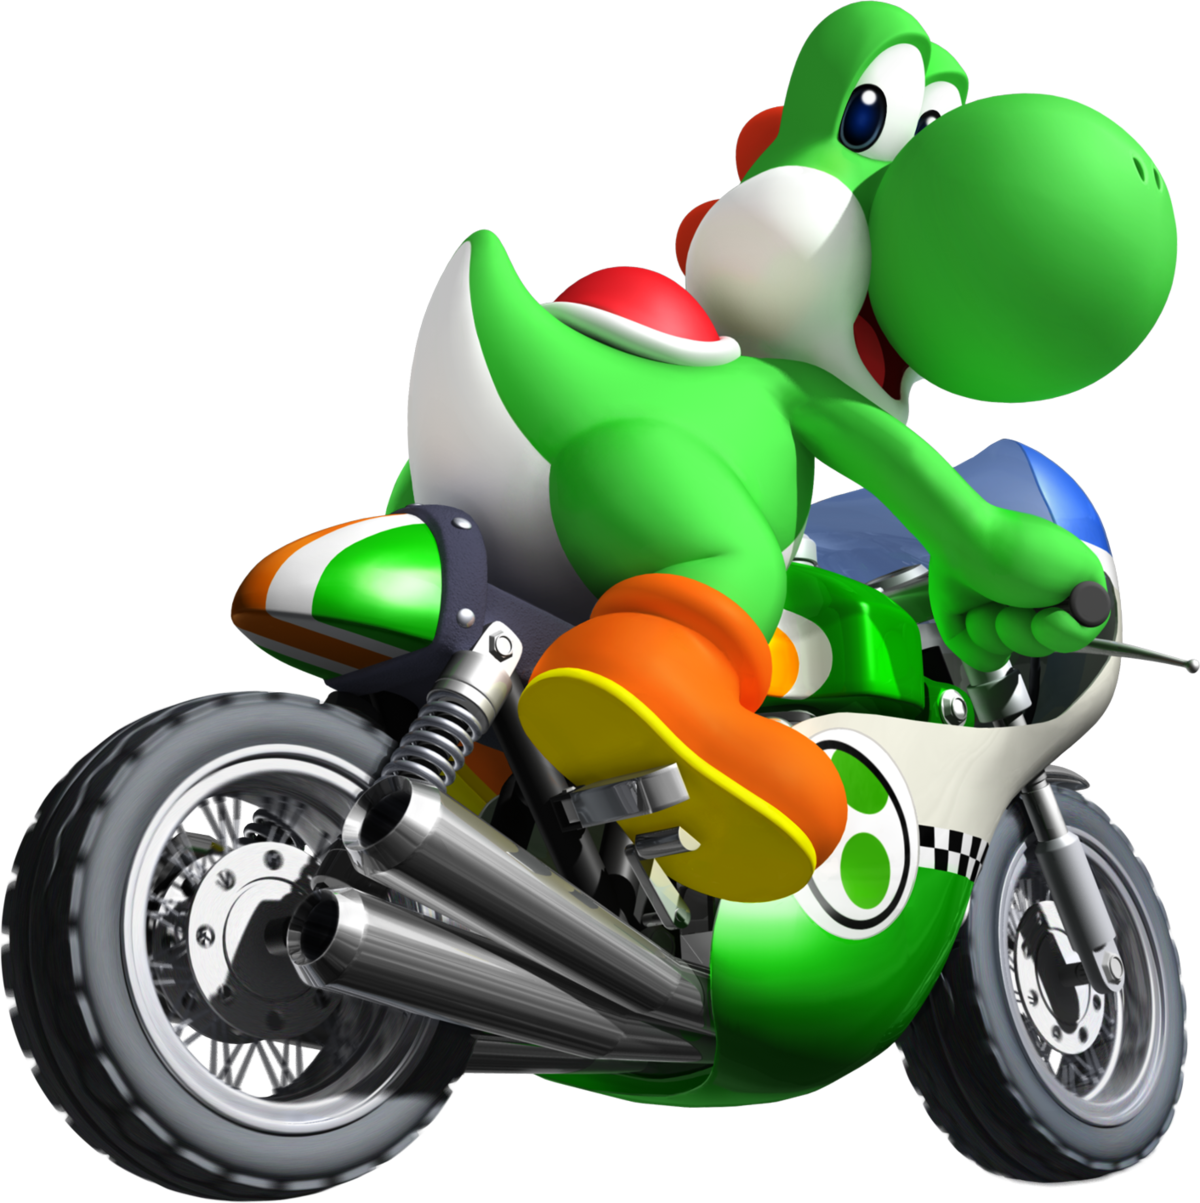 Worden Overredend roem Bike - Super Mario Wiki, the Mario encyclopedia